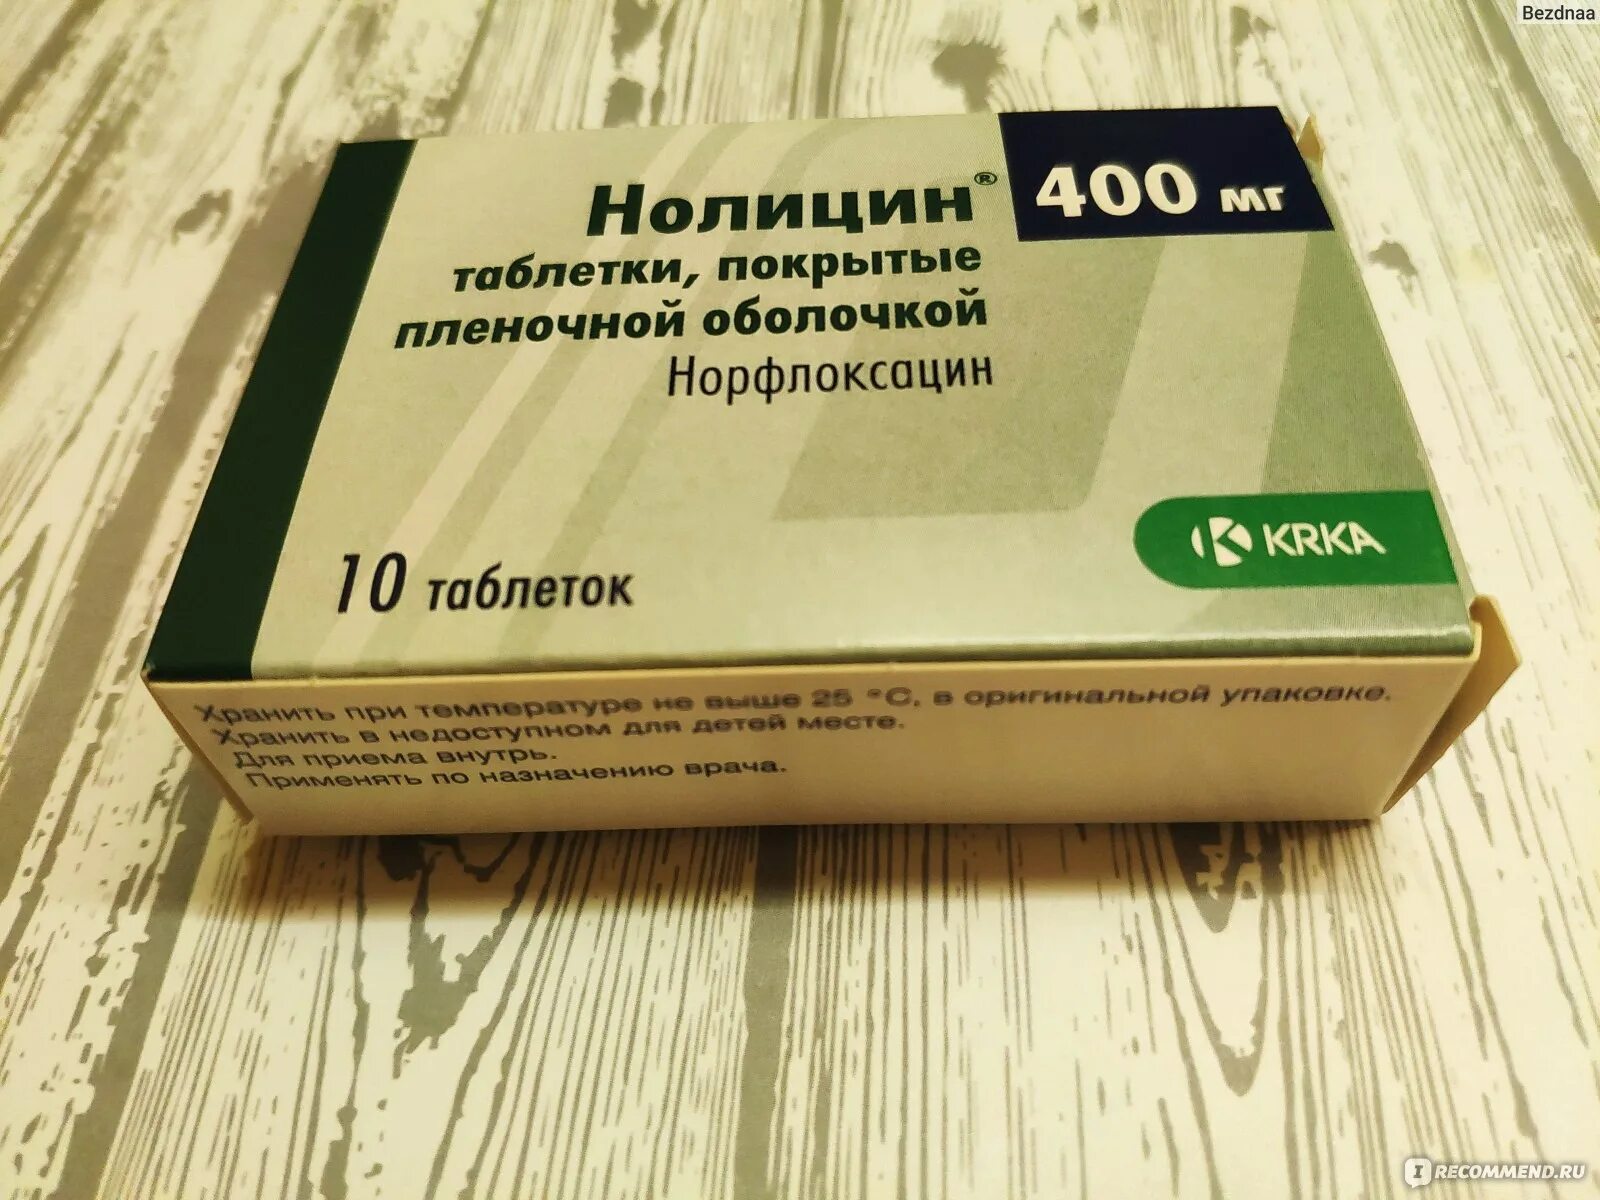 Таблетки вид одан. Таблетки антибиотики тимоларон. Лекарство от цистита в Турции. Нолицин отзывы.